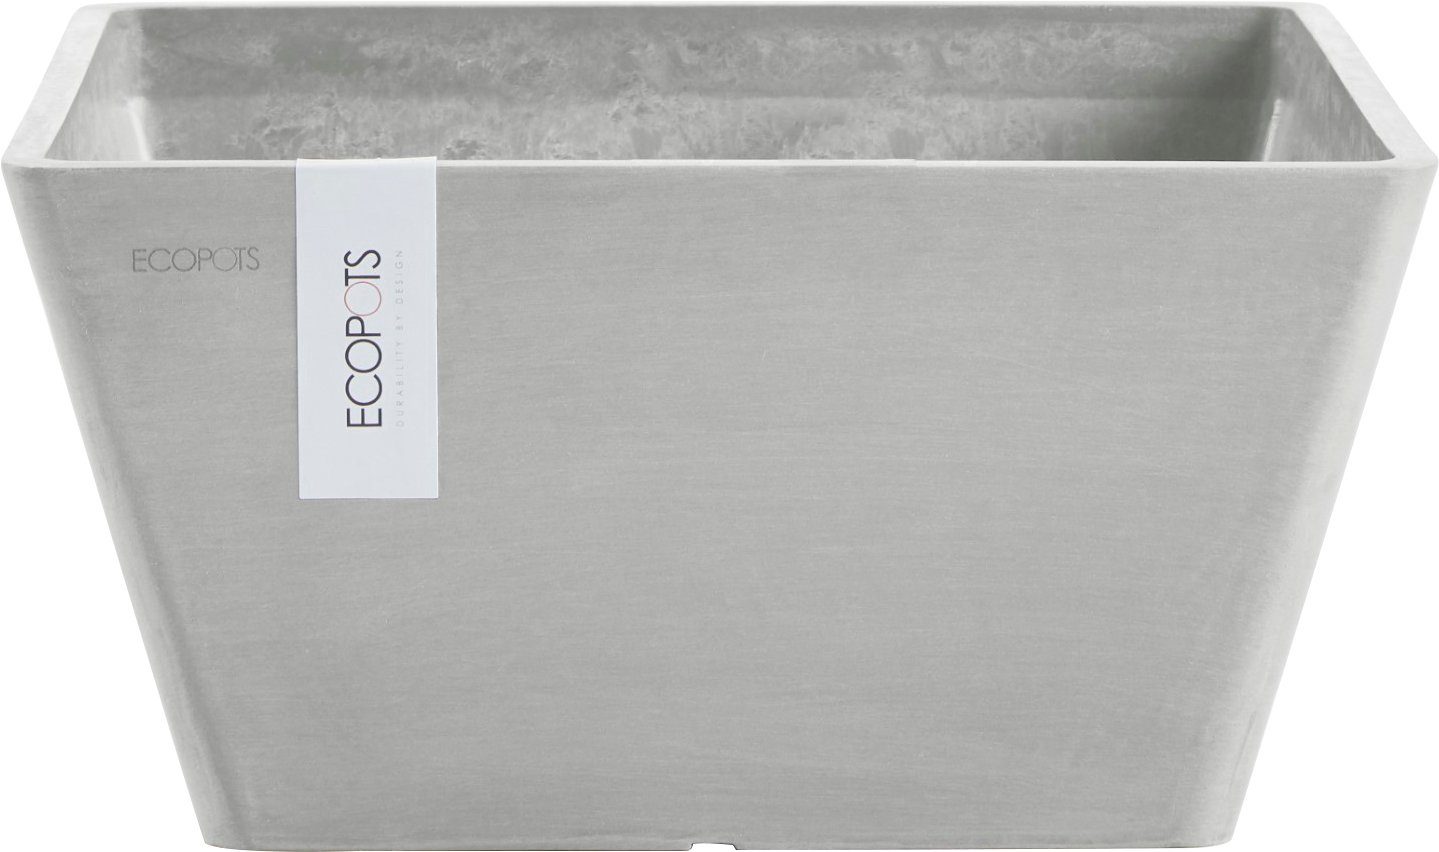 ECOPOTS Blumentopf BERLIN White Grey, BxTxH: 31x31x15,5 cm